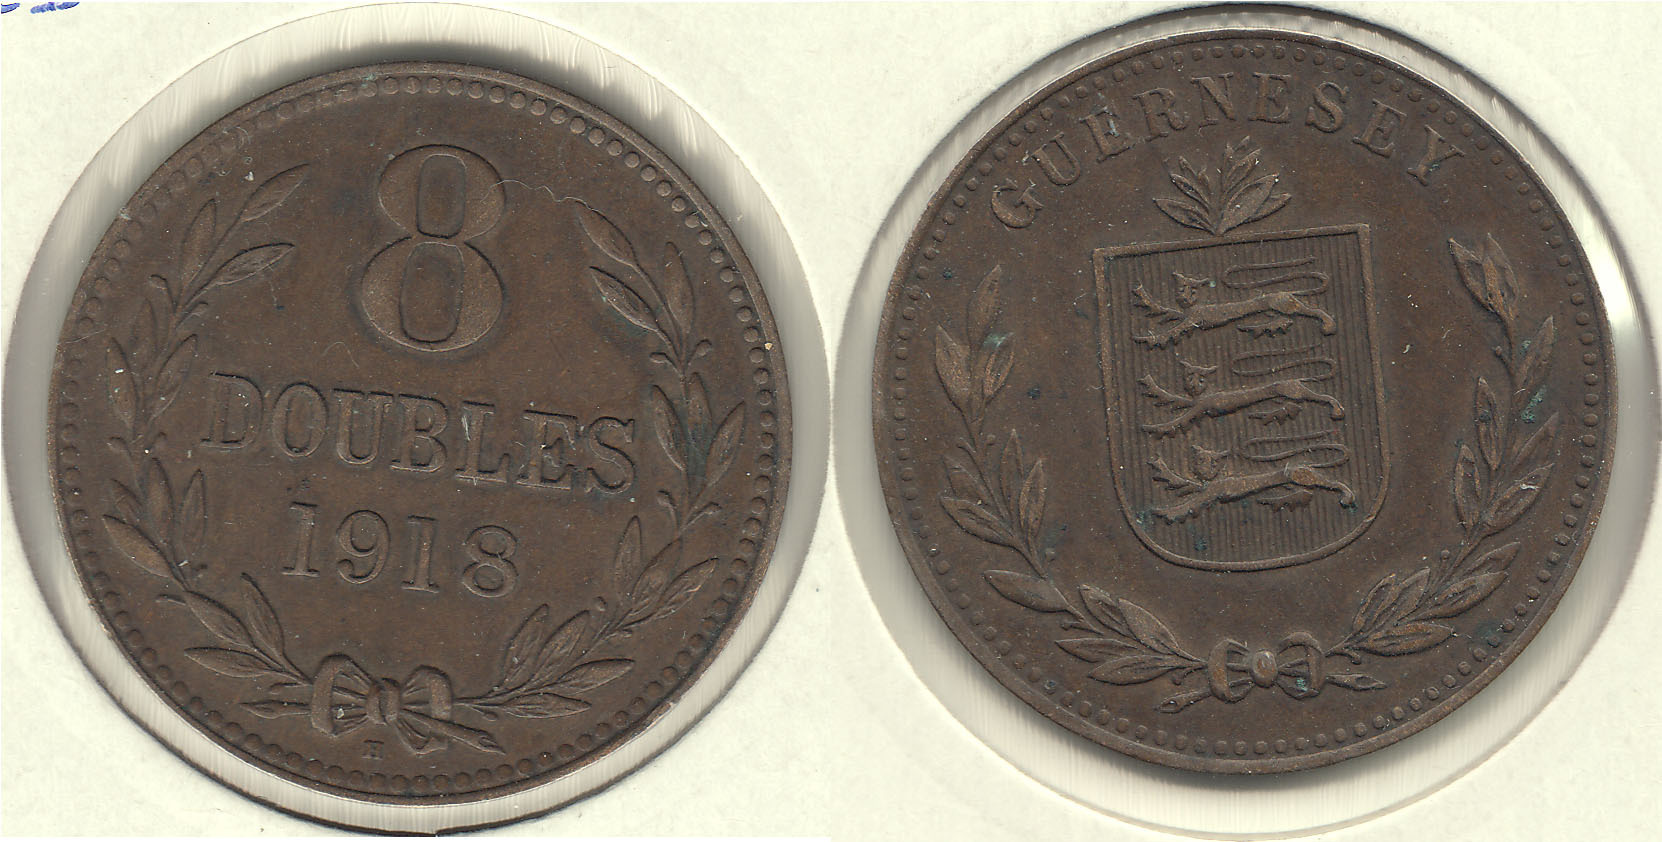 GUERNESEY - GUERNSEY. 8 DOBLES (DOUBLES) DE 1918.